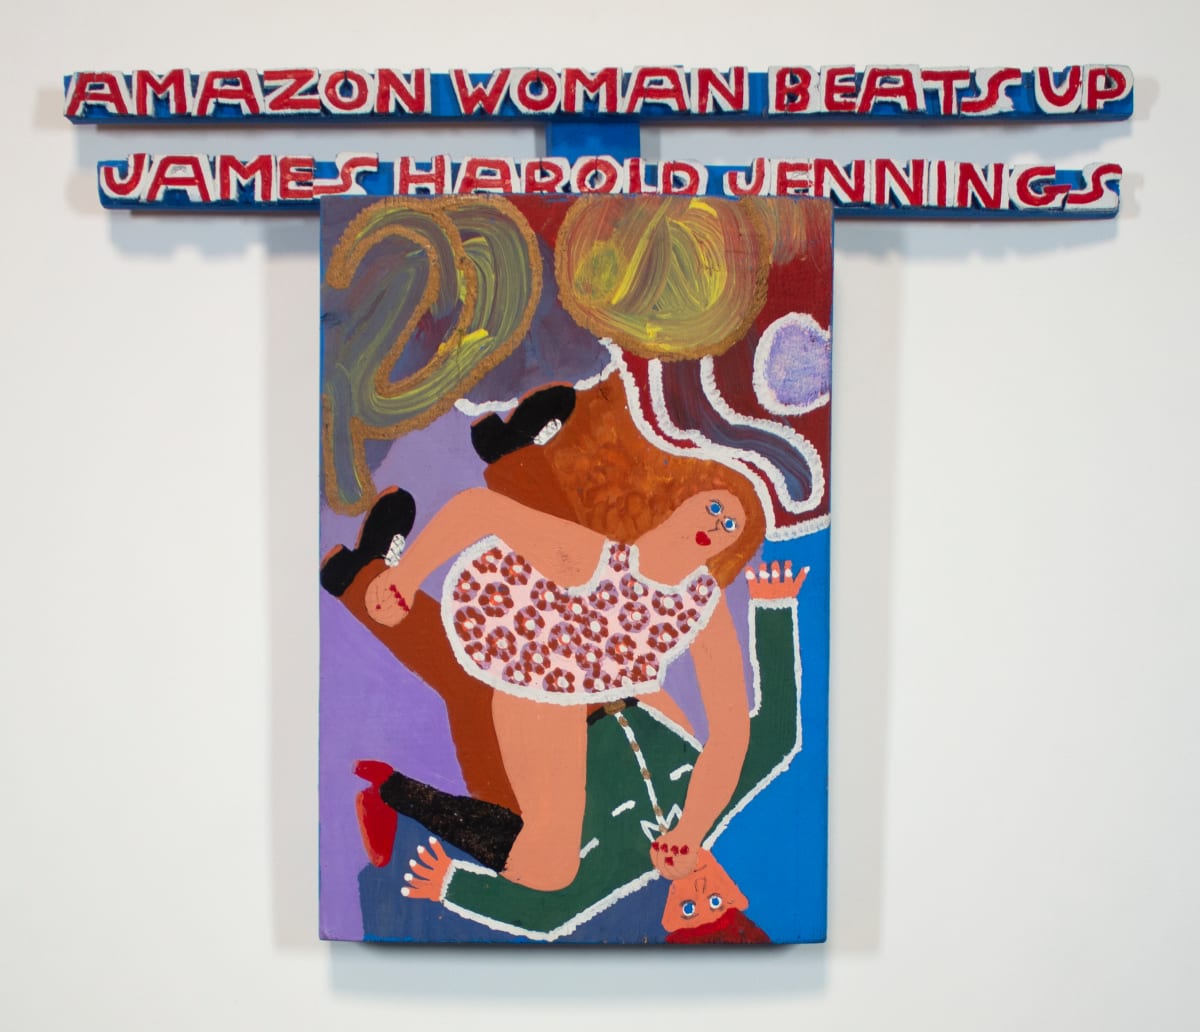 Amazon Woman Beats Up James Harold Jennings by James Harold Jennings 